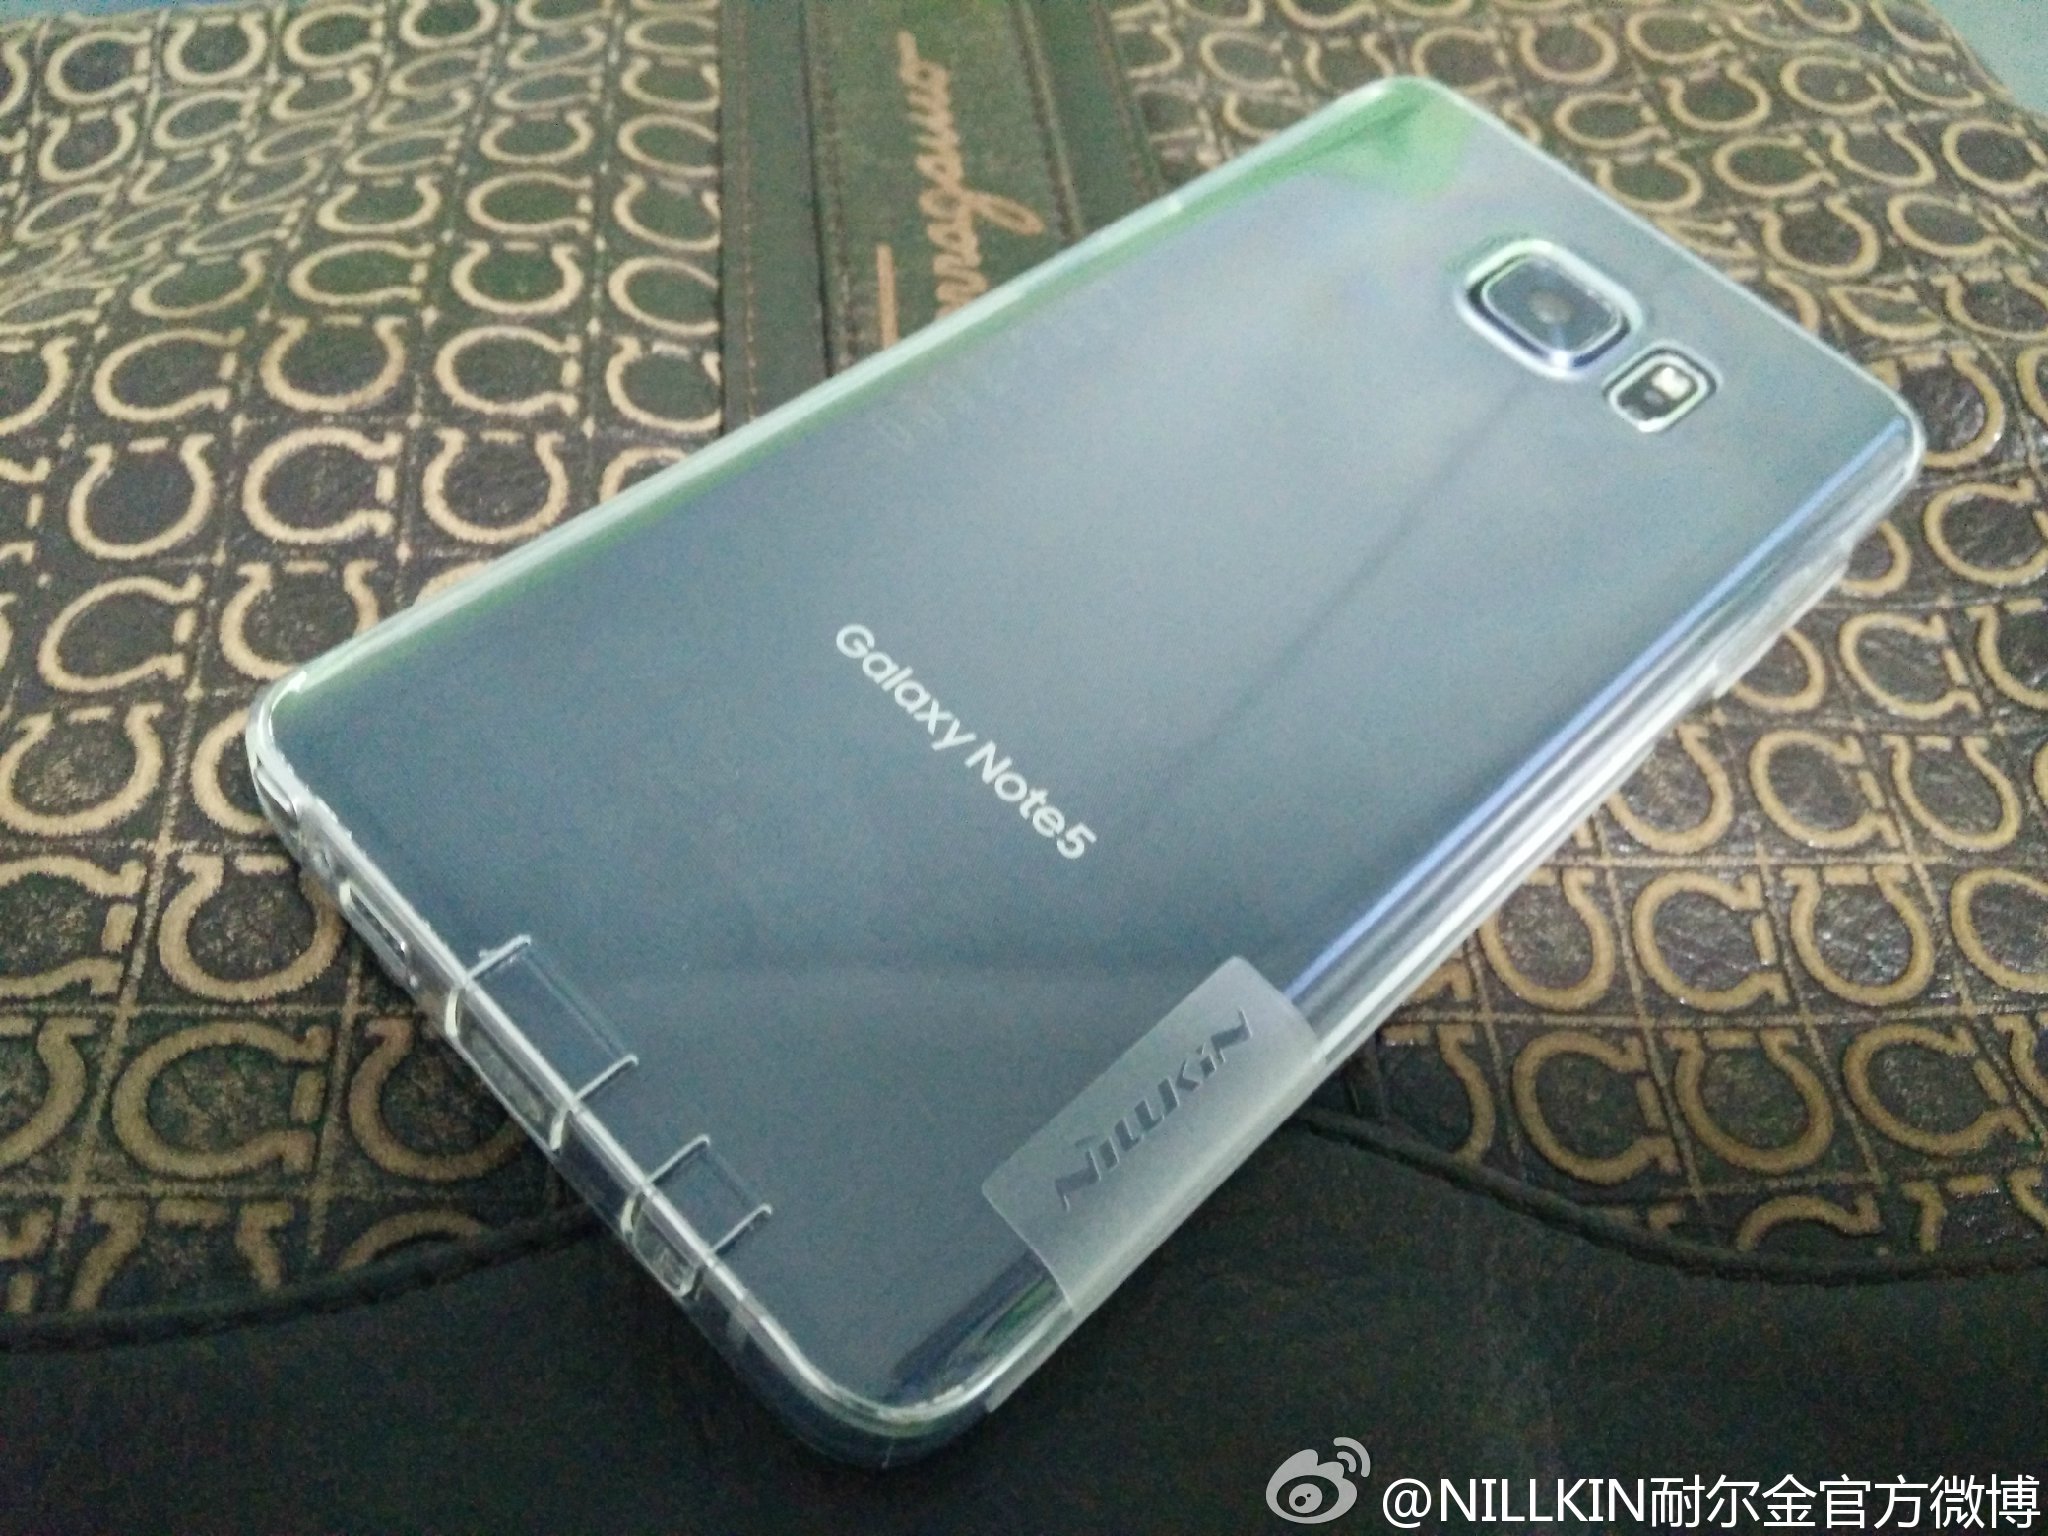 Samsung Galaxy Note 5 S6 Edge plus marketing 07